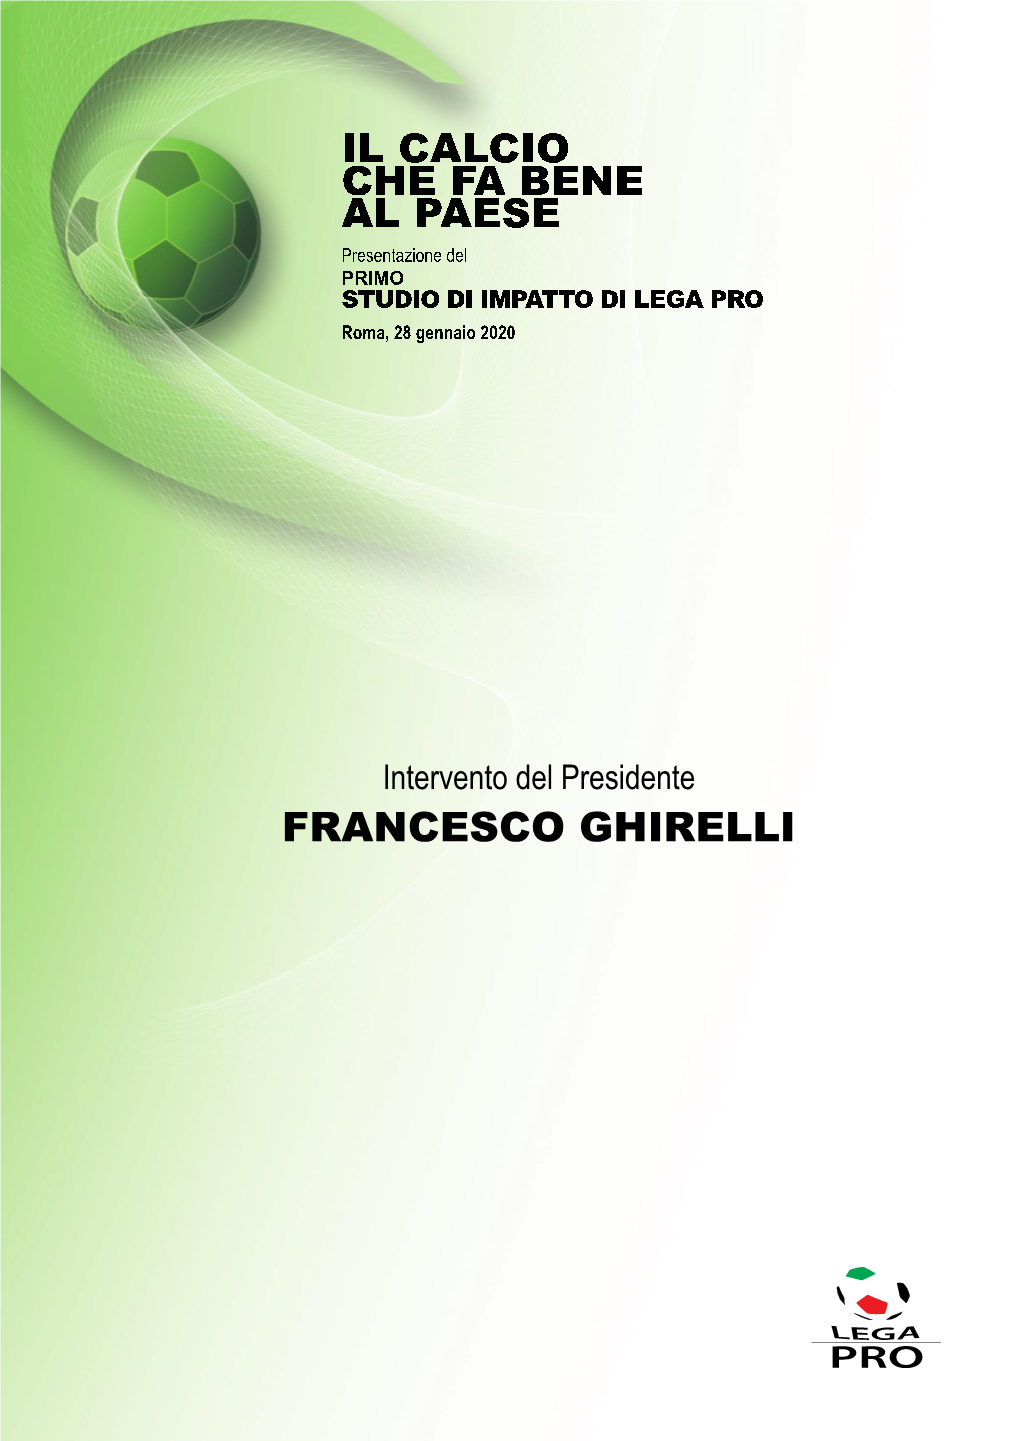 Francesco Ghirelli